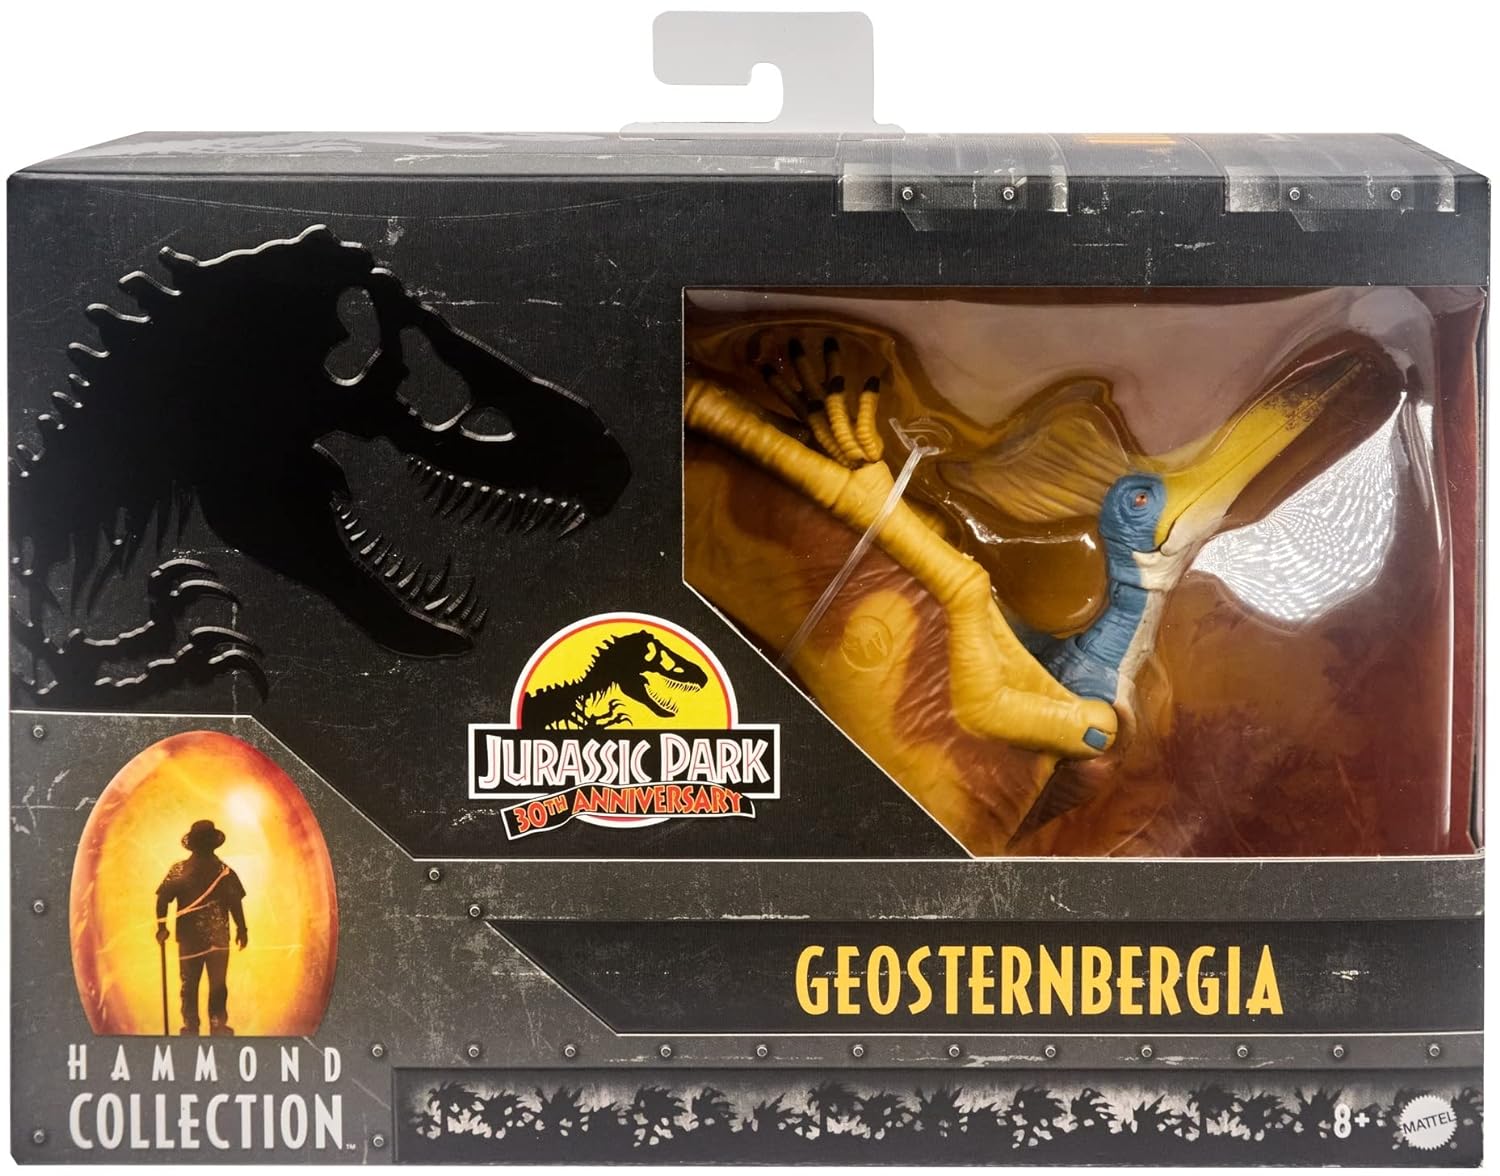 Jurassic World Jurassic Park Collector Dinosaur Geosternbergia Hammond Collection,Deluxe Articulation,Movie Authentic Figure,Toy Gift?